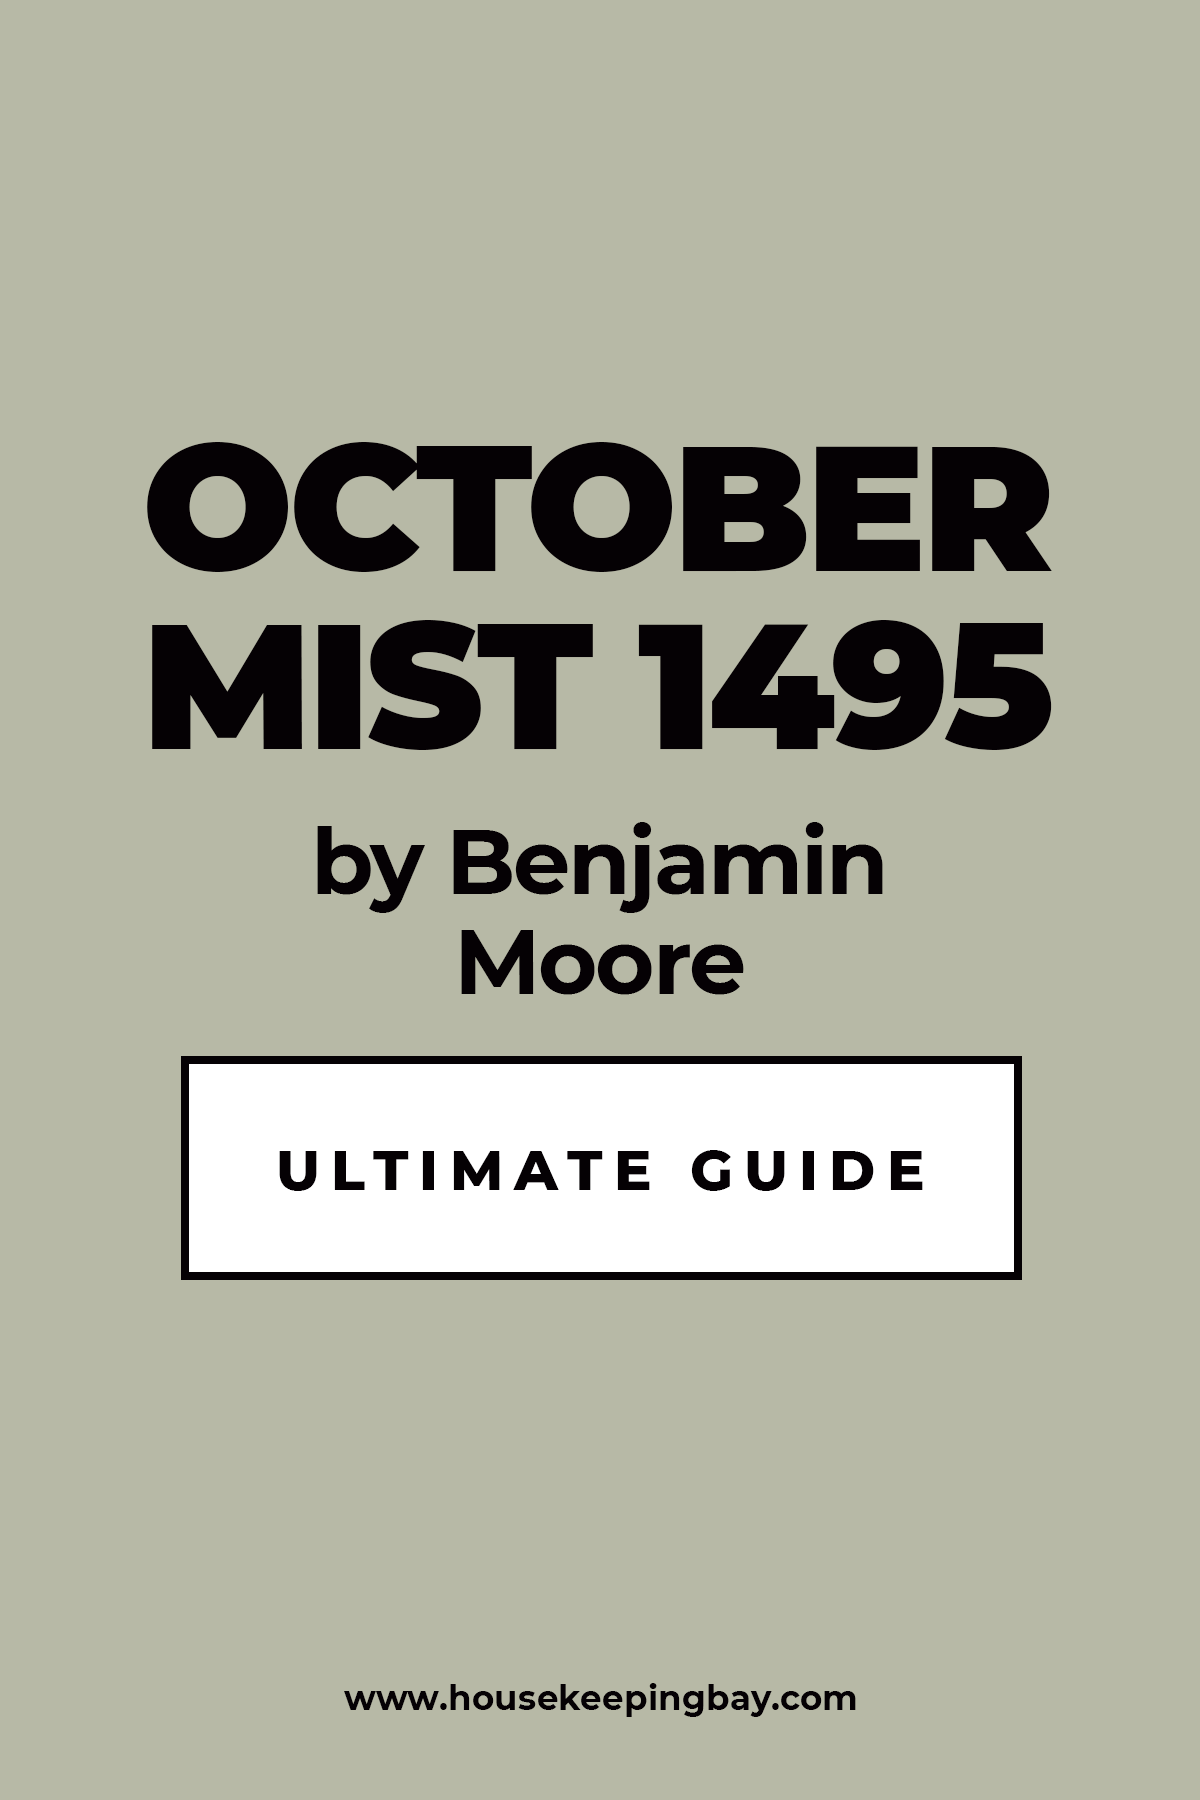 October Mist 1495 by Benjamin Moore Ultimate Guide